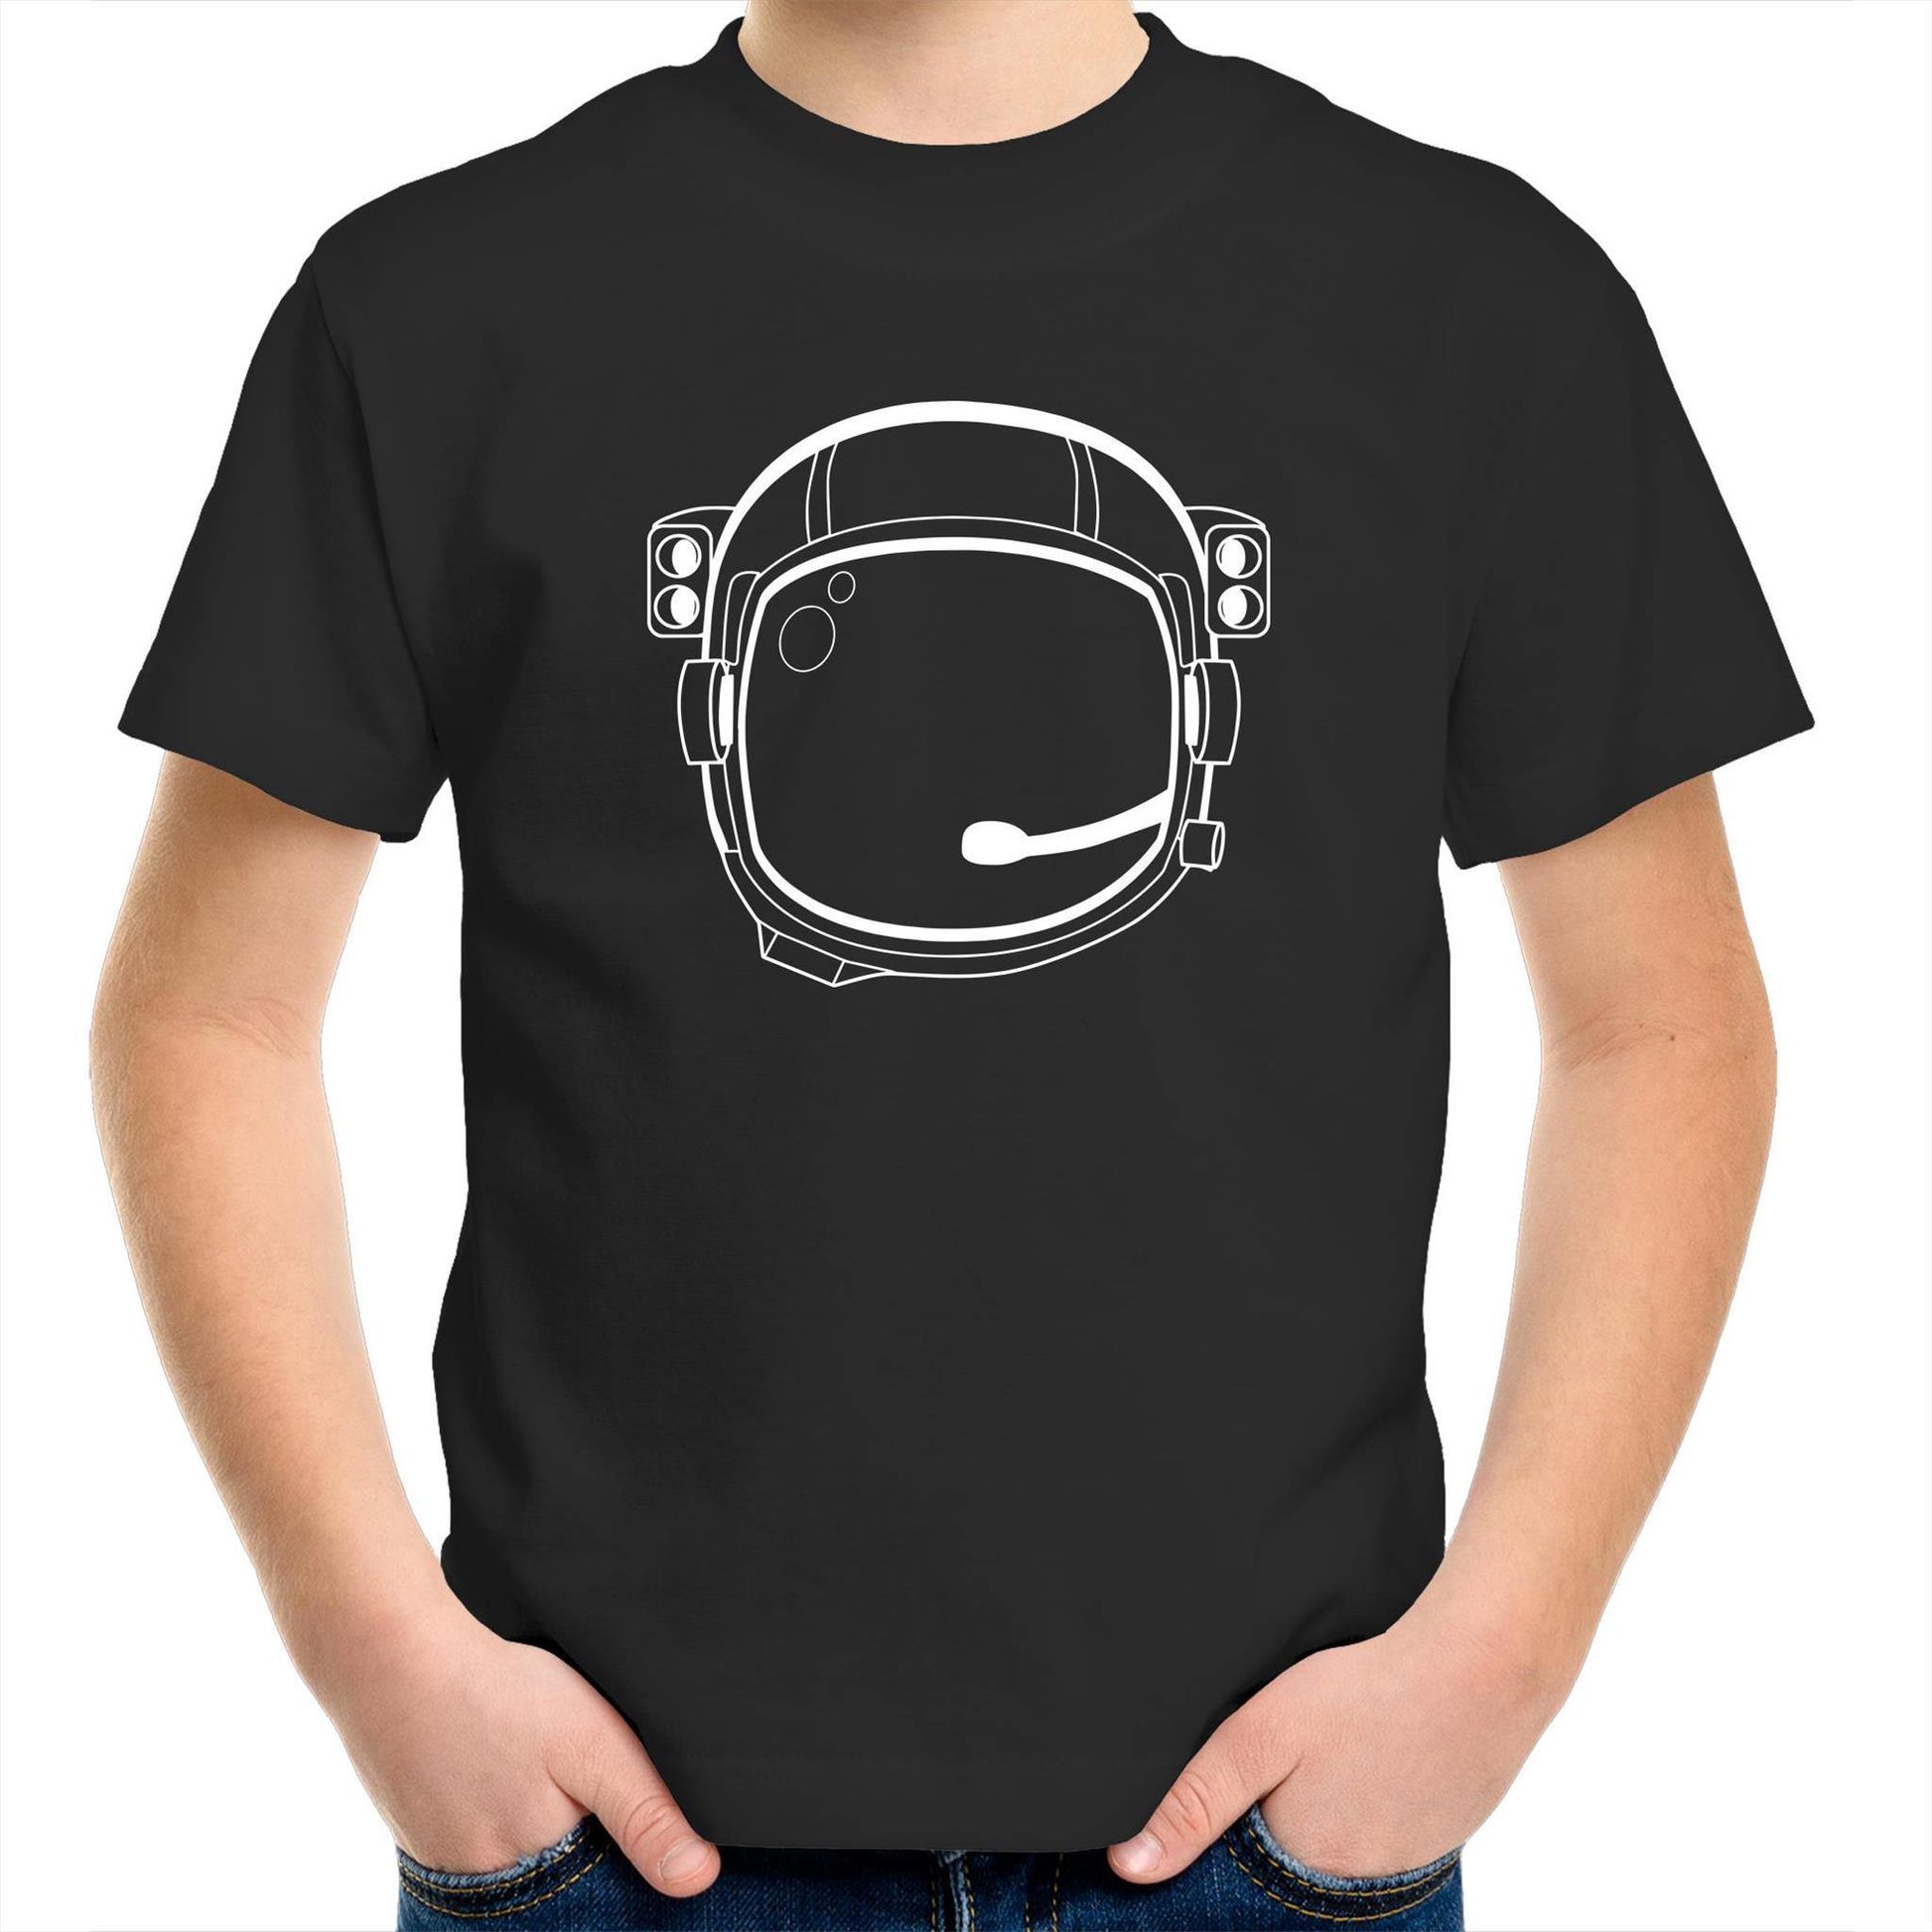 Astronaut Helmet - Kids Youth Crew T-Shirt Black Kids Youth T-shirt Space